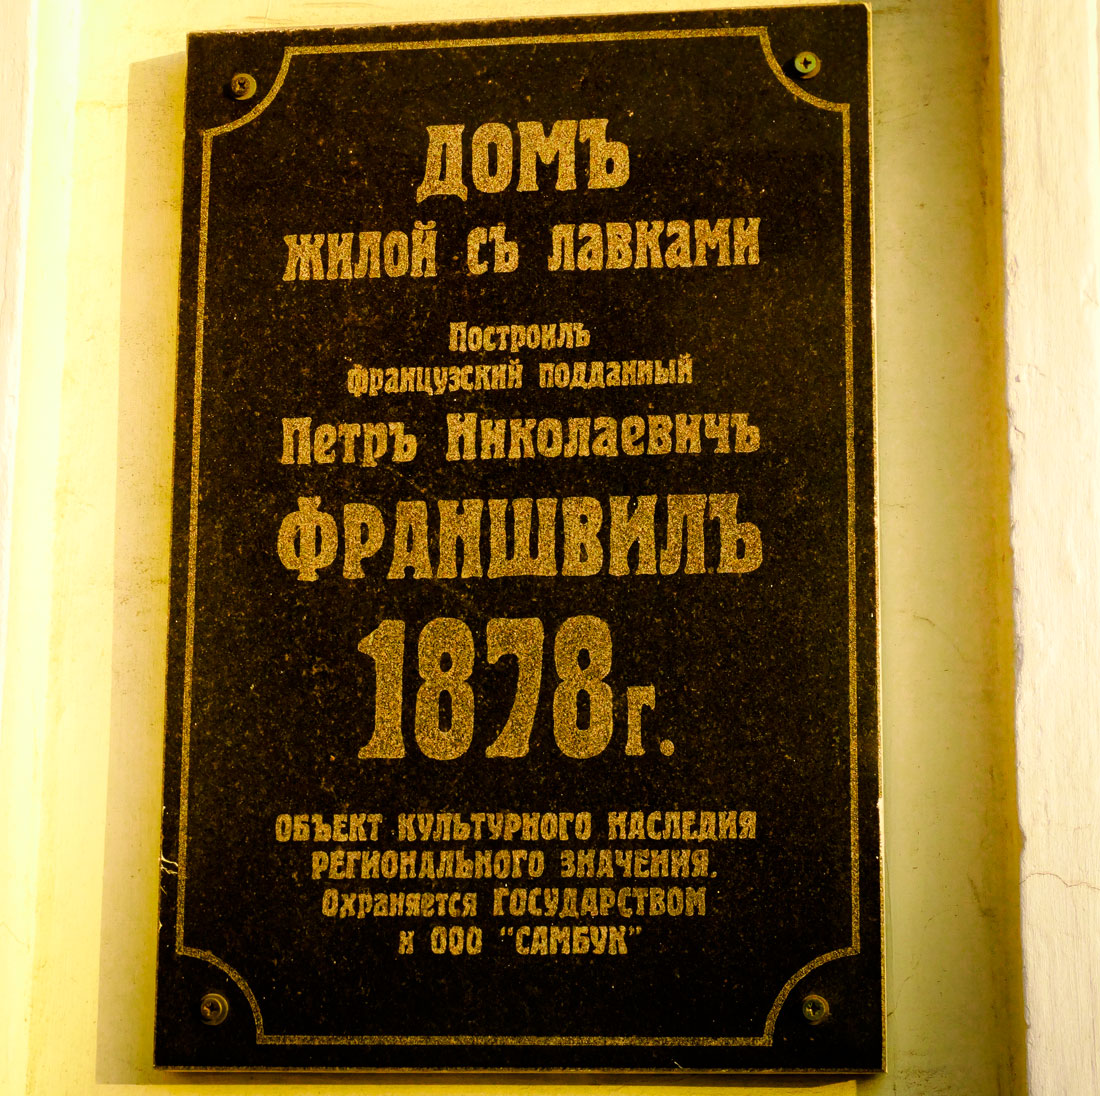 Samara, Улица Фрунзе, 145. Samara — Protective signs